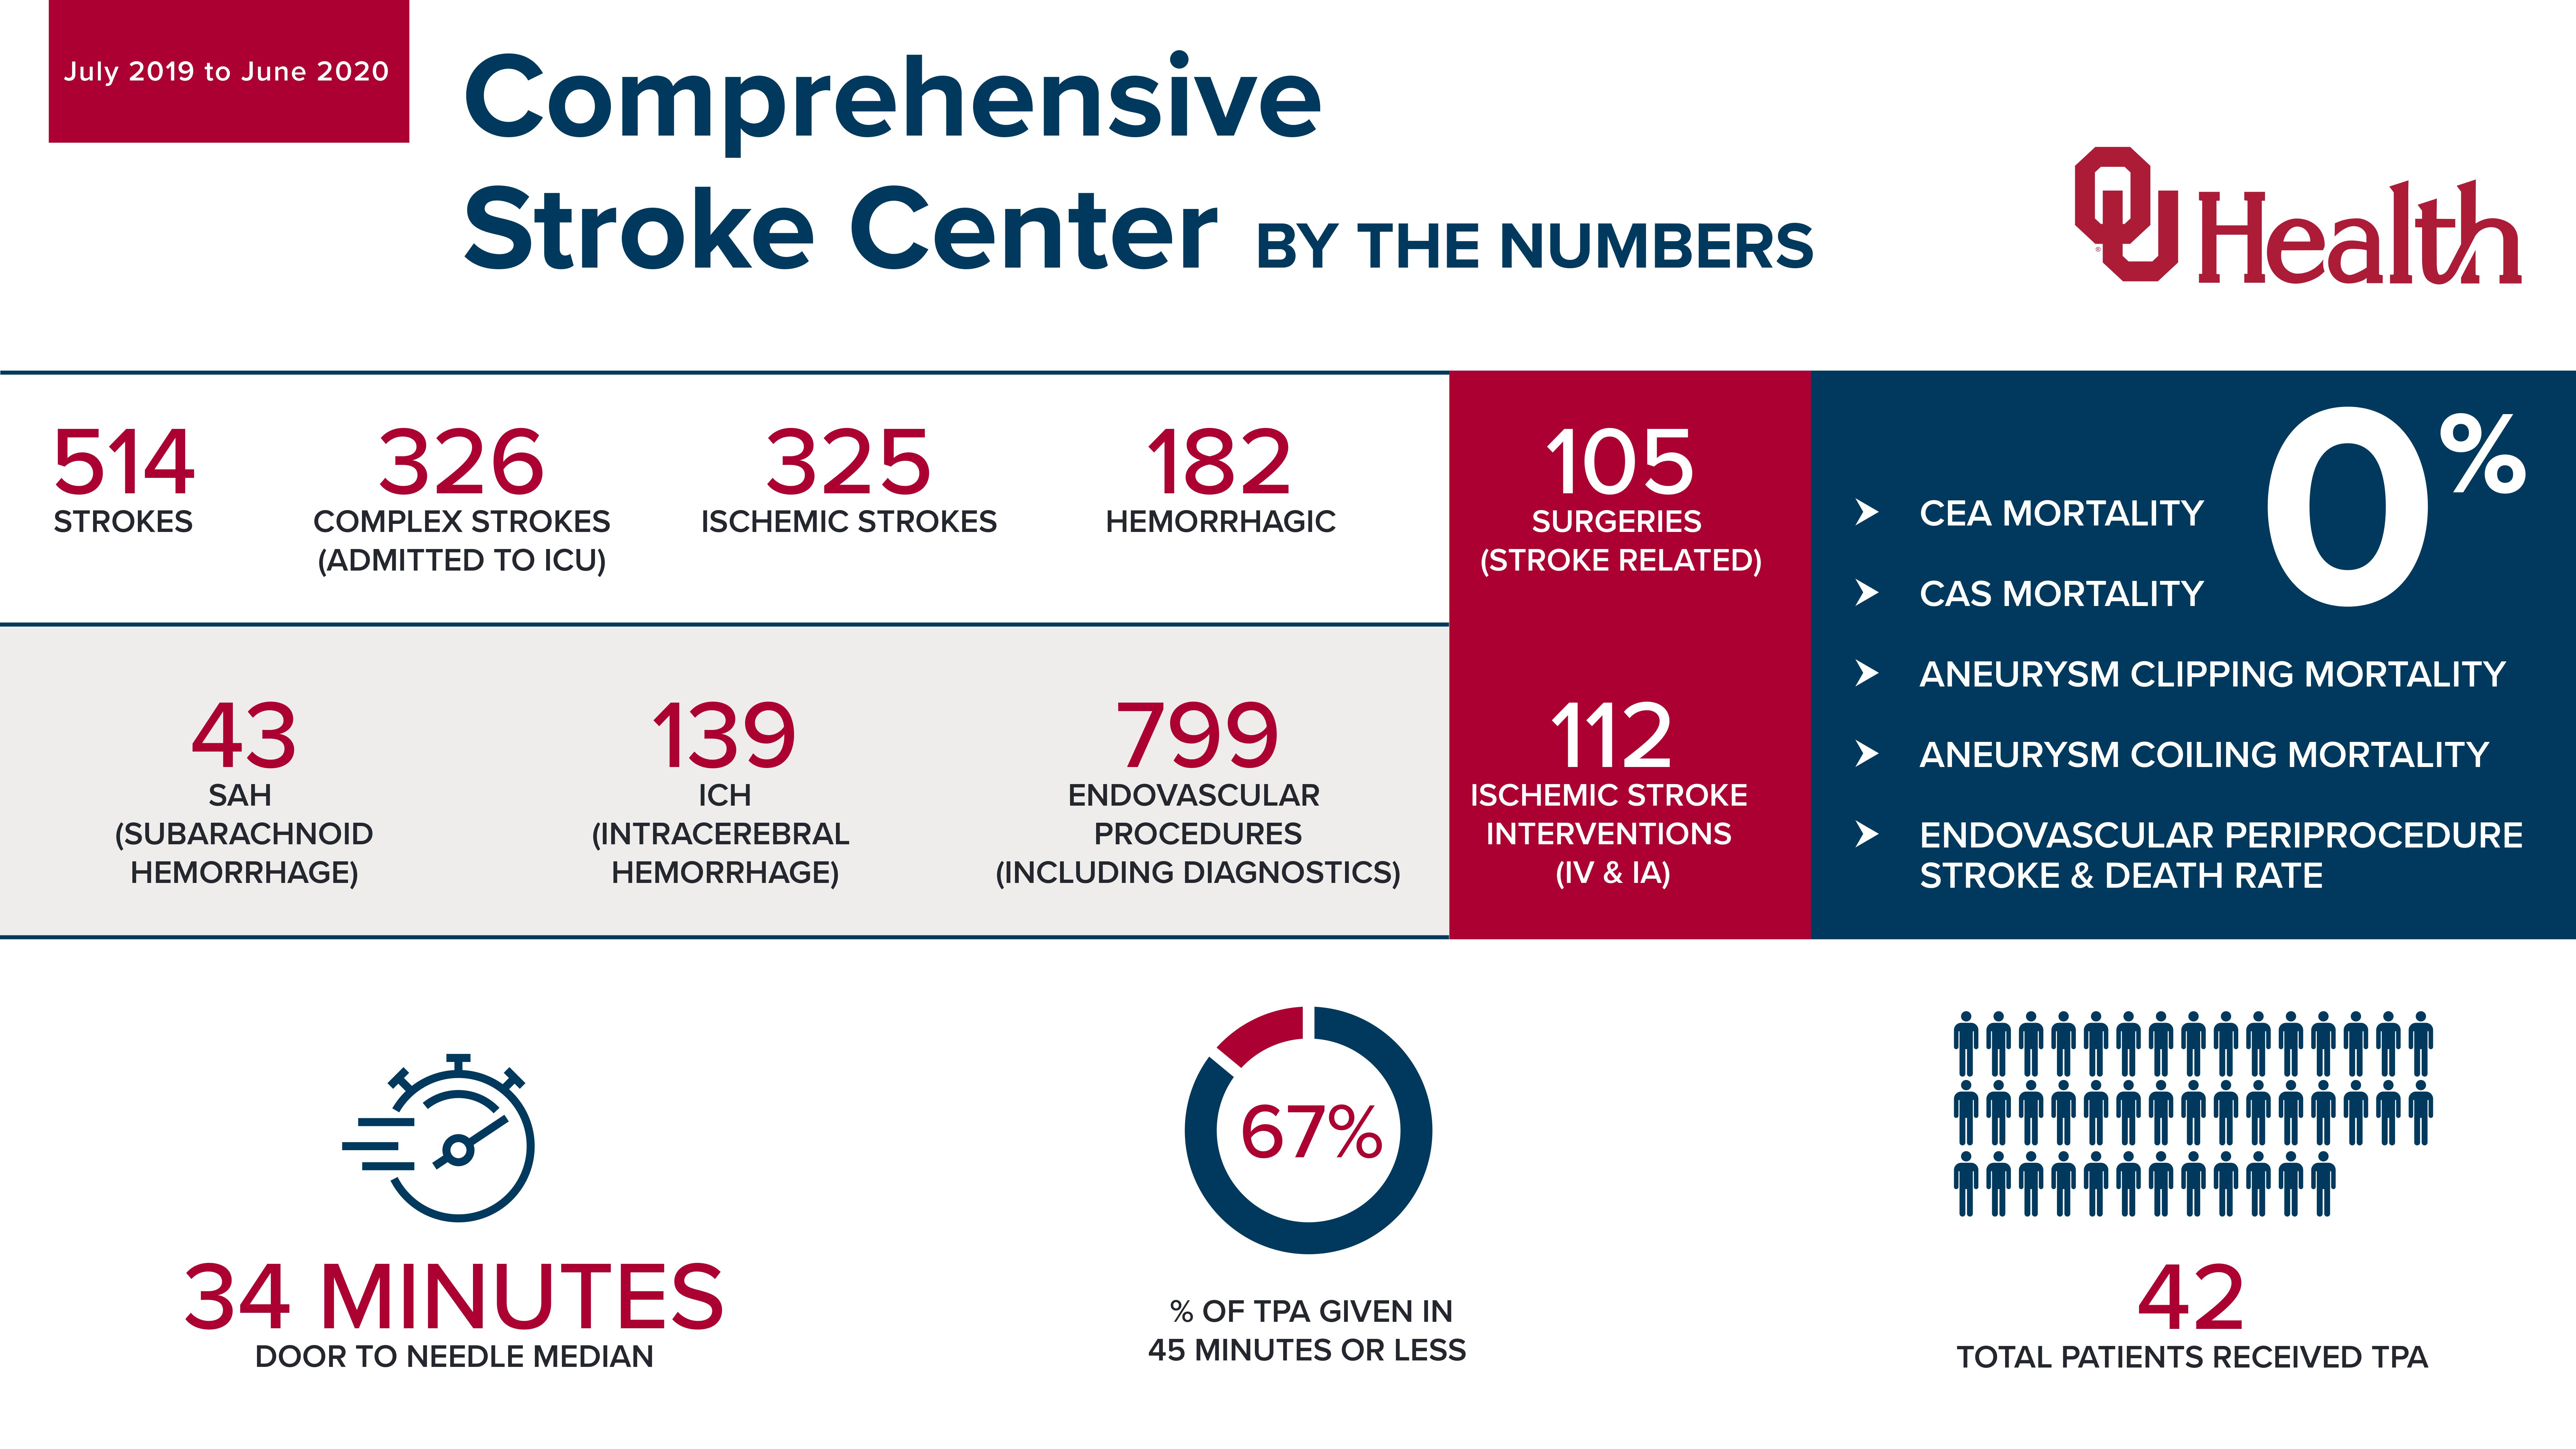 Comprehensive Stroke Care at OU Health